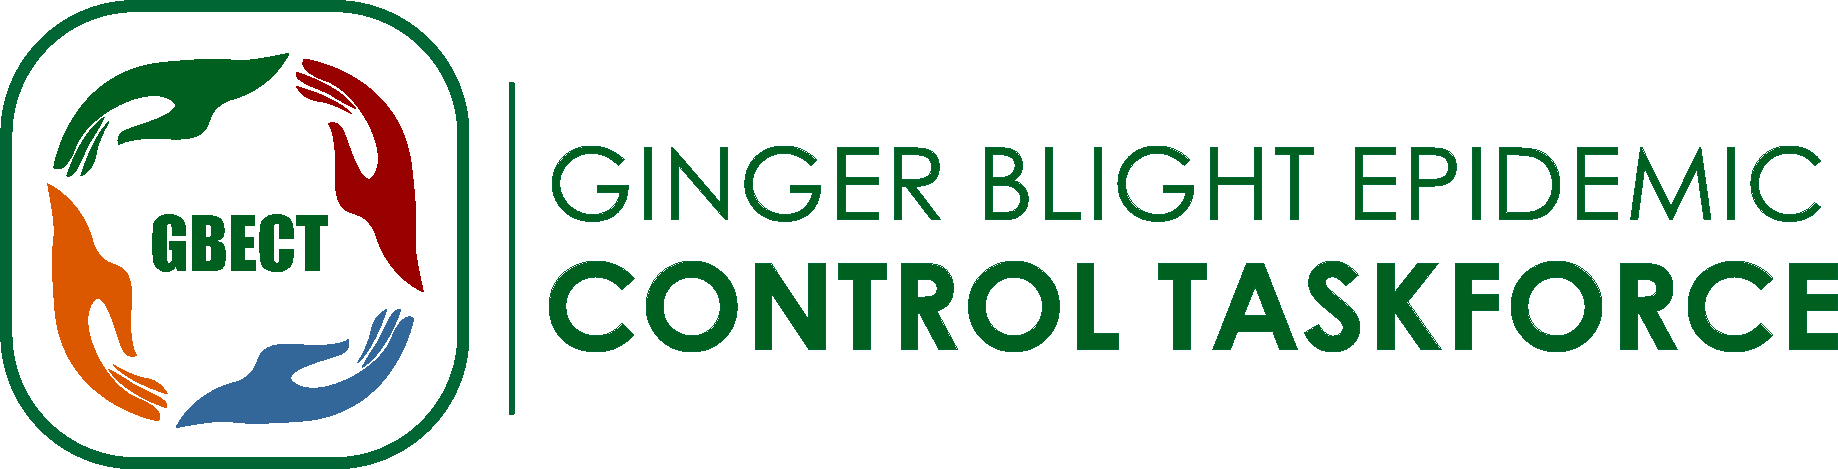 Ginger Blight Epidemic Control Task Force